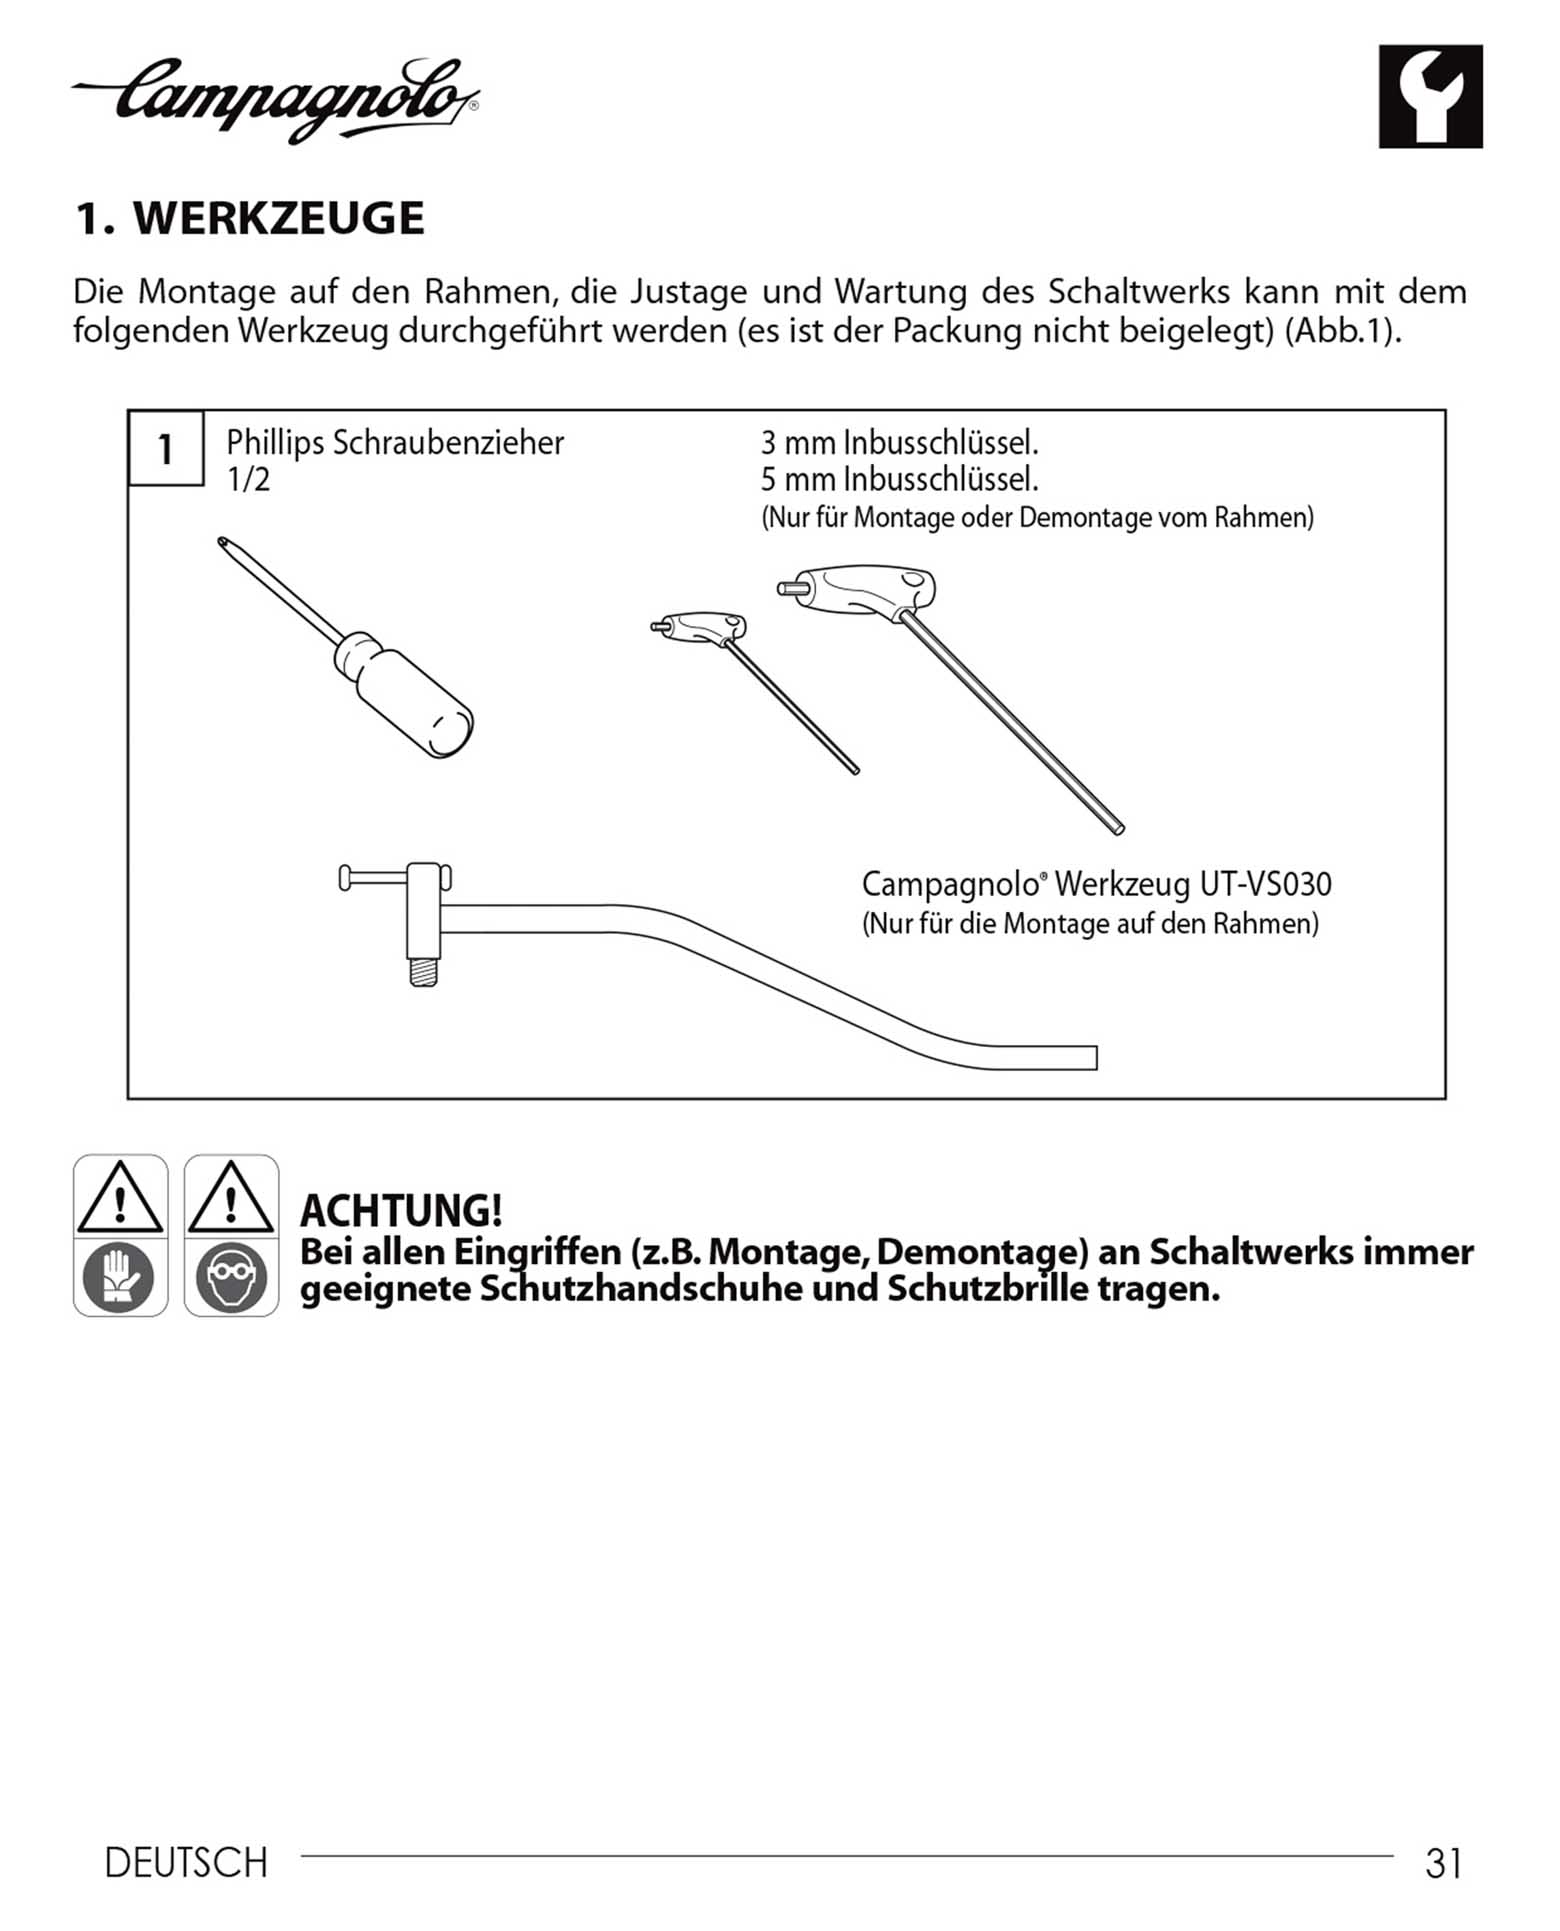 Campagnolo instructions - 7225475 Rear Derailleur ('12/2009') page 031 main image